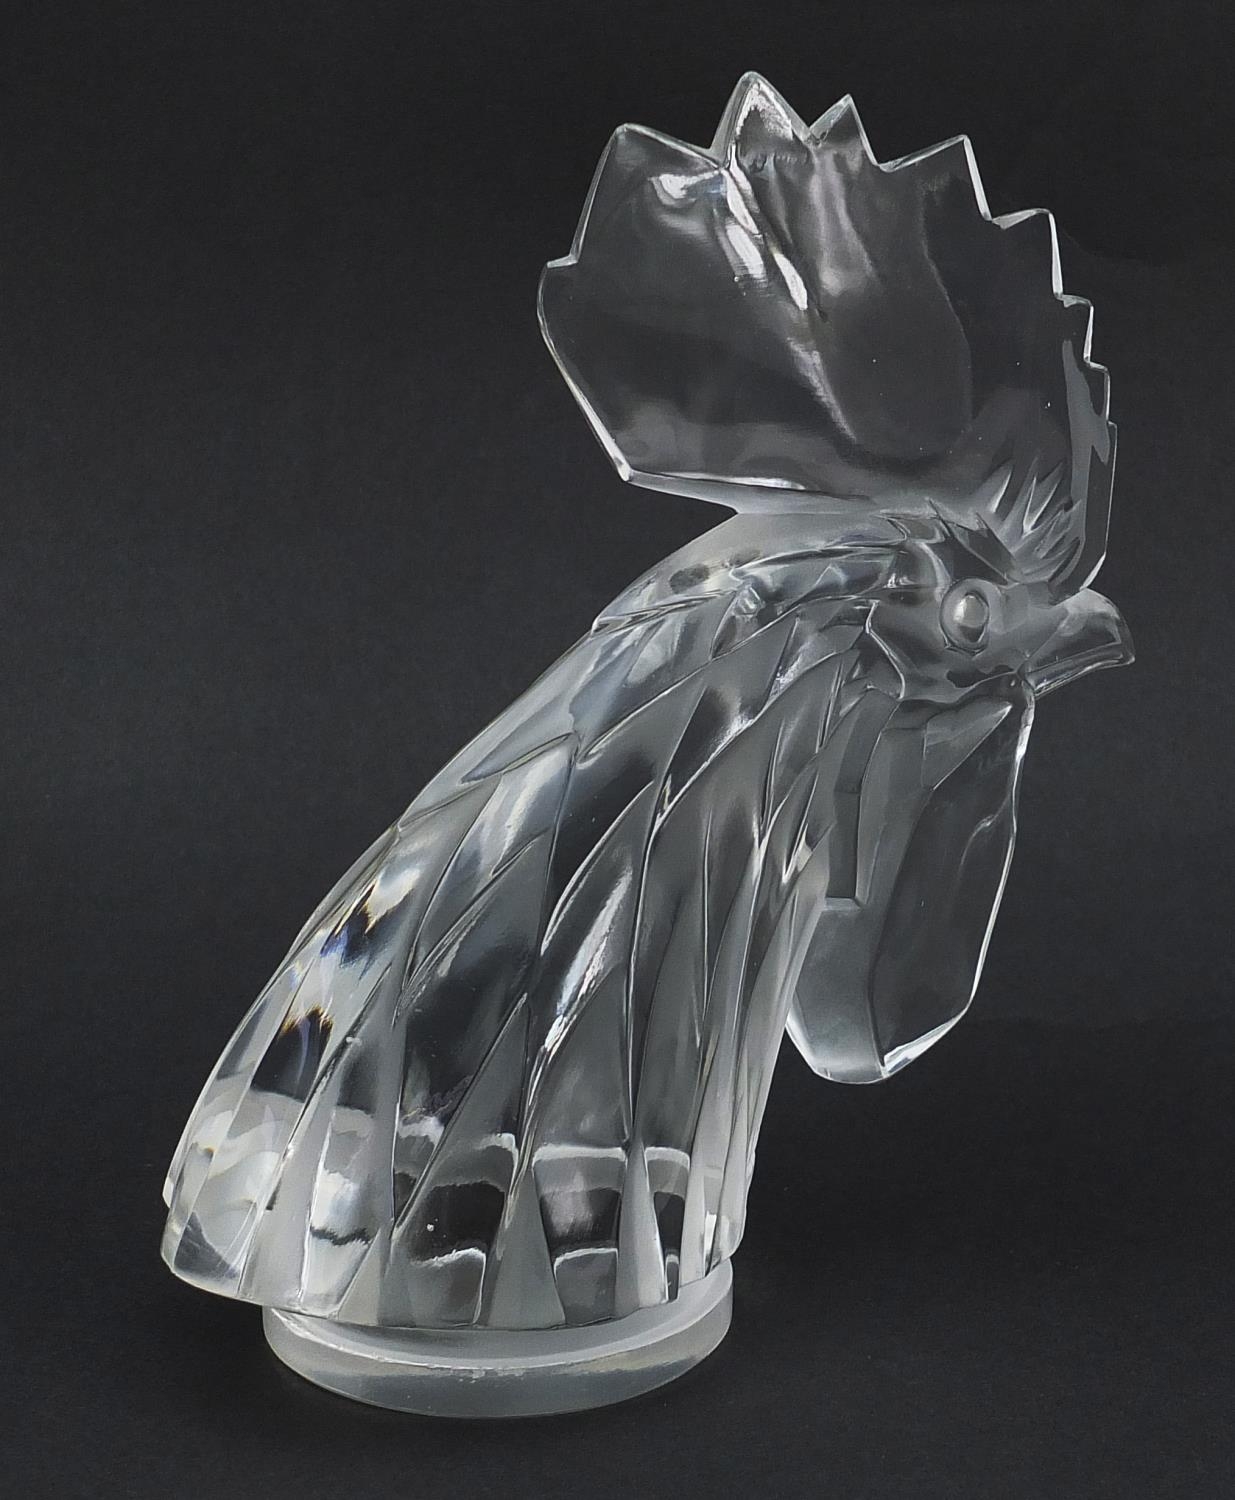 Lalique, French Tete de Coq cockerel glass car mascot, number 1137, 17.5cm high - Image 2 of 4